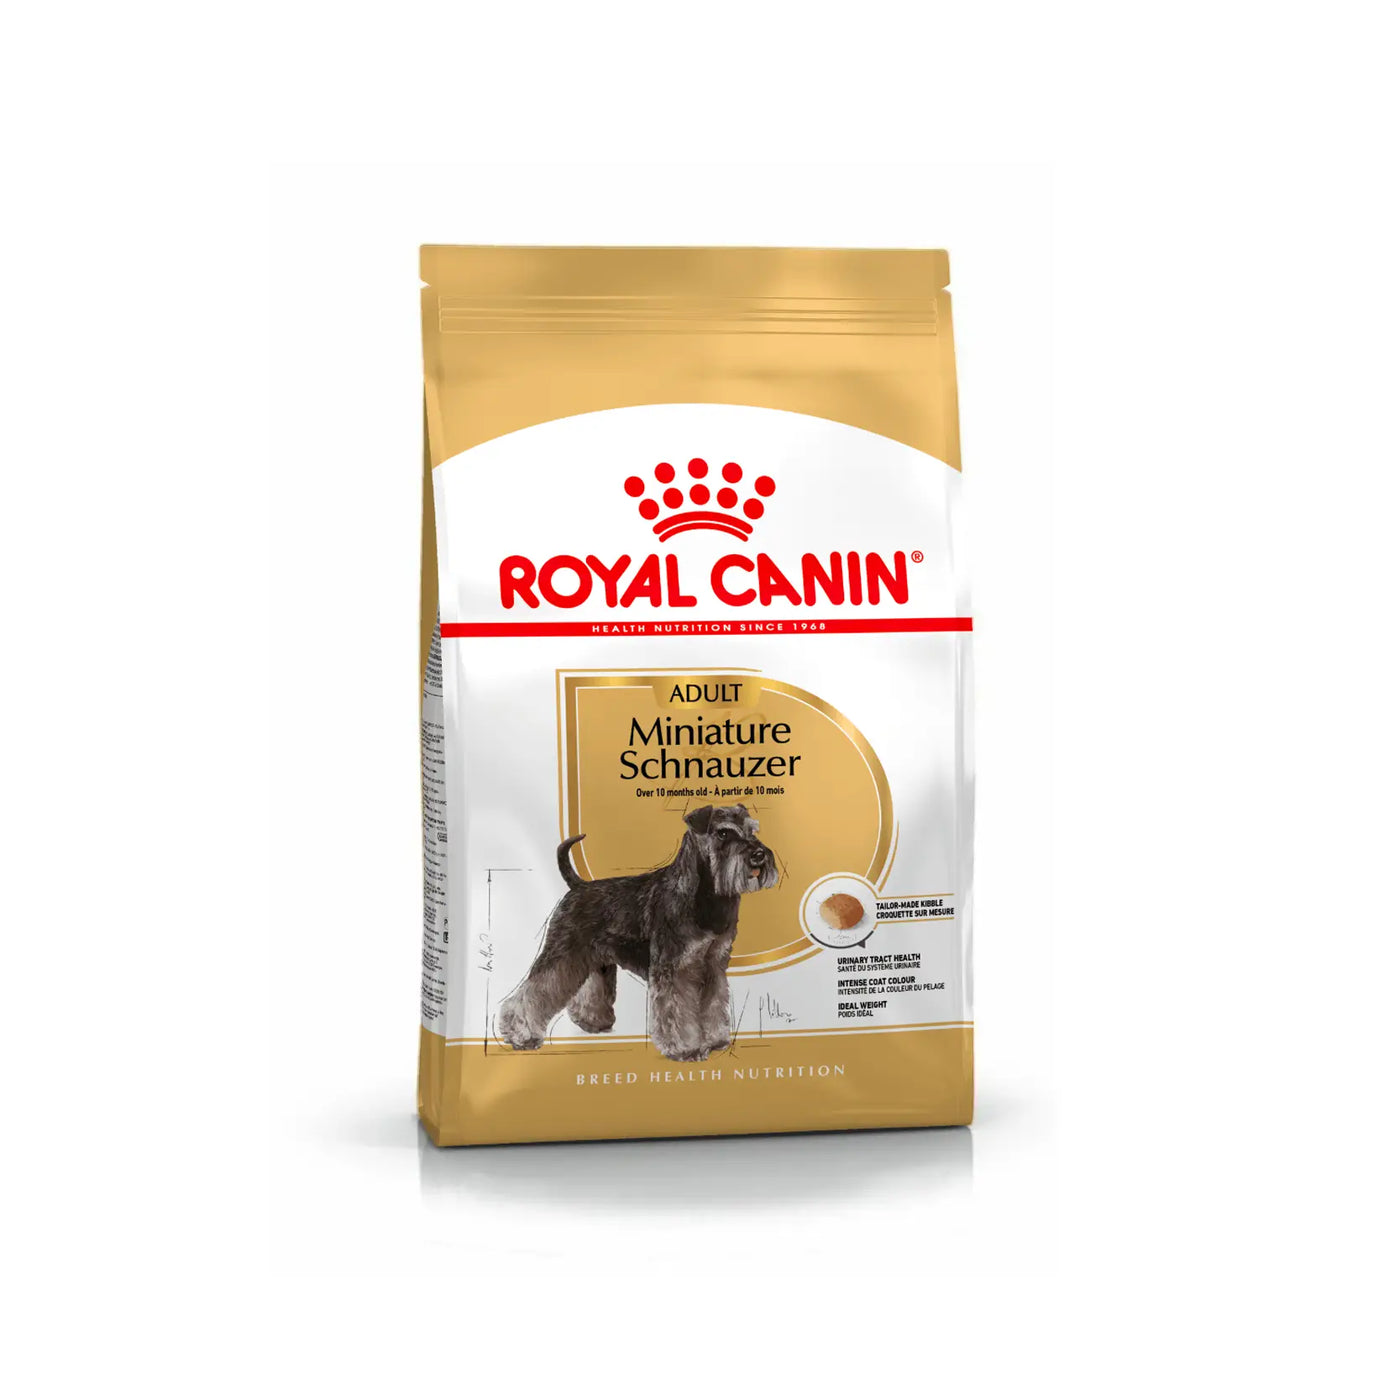 Royal Canin - Miniature Schnauzer Adult Dry Food